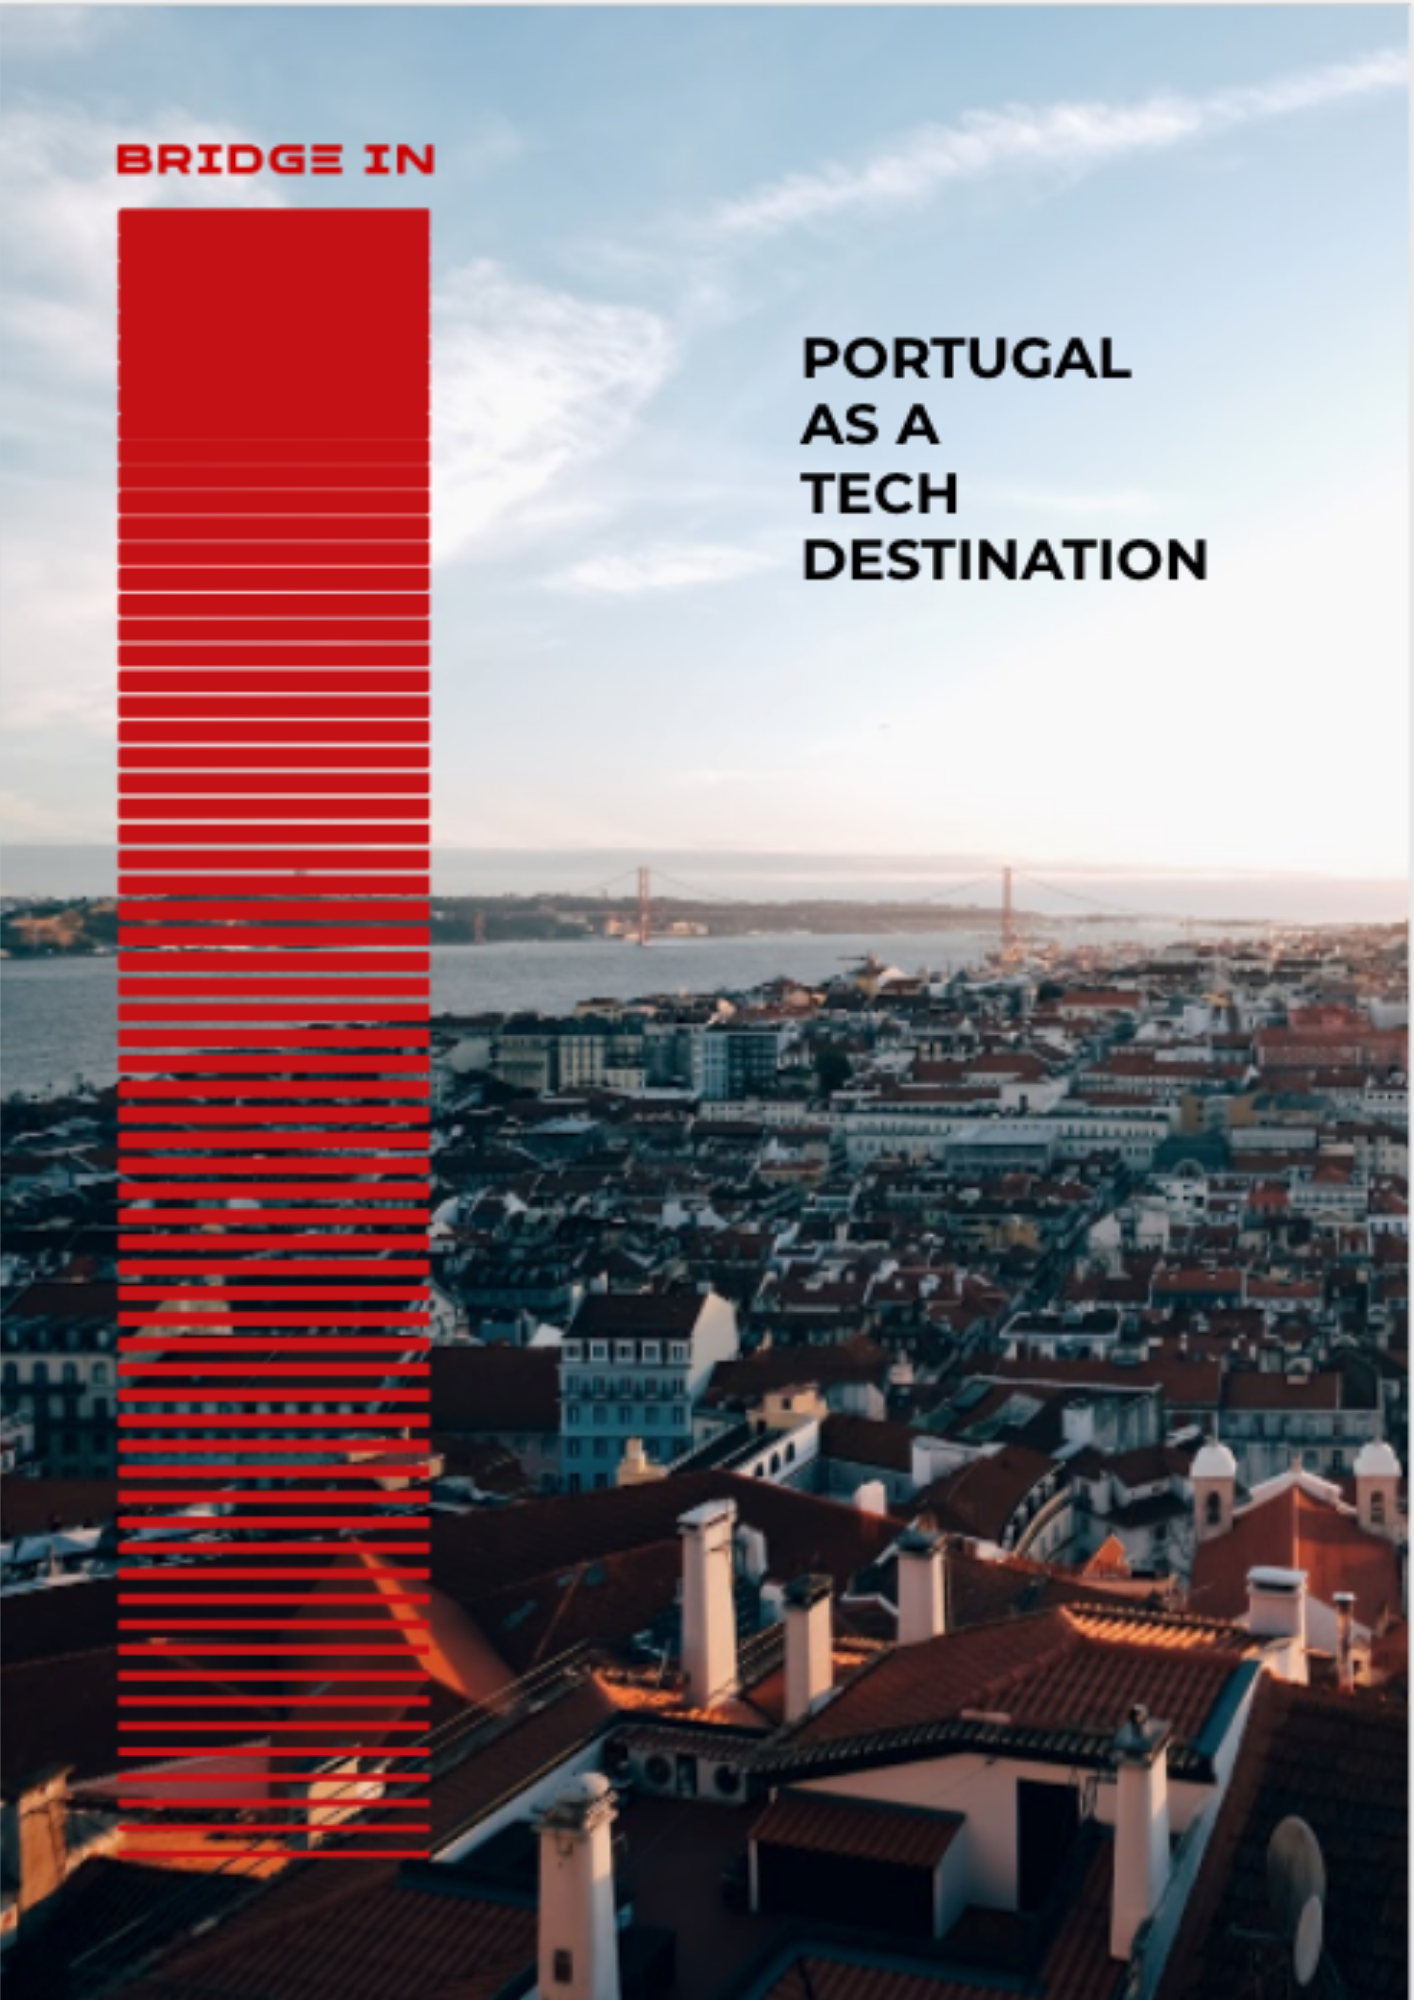 Portugal as a Tech Destination - BRIDGE IN